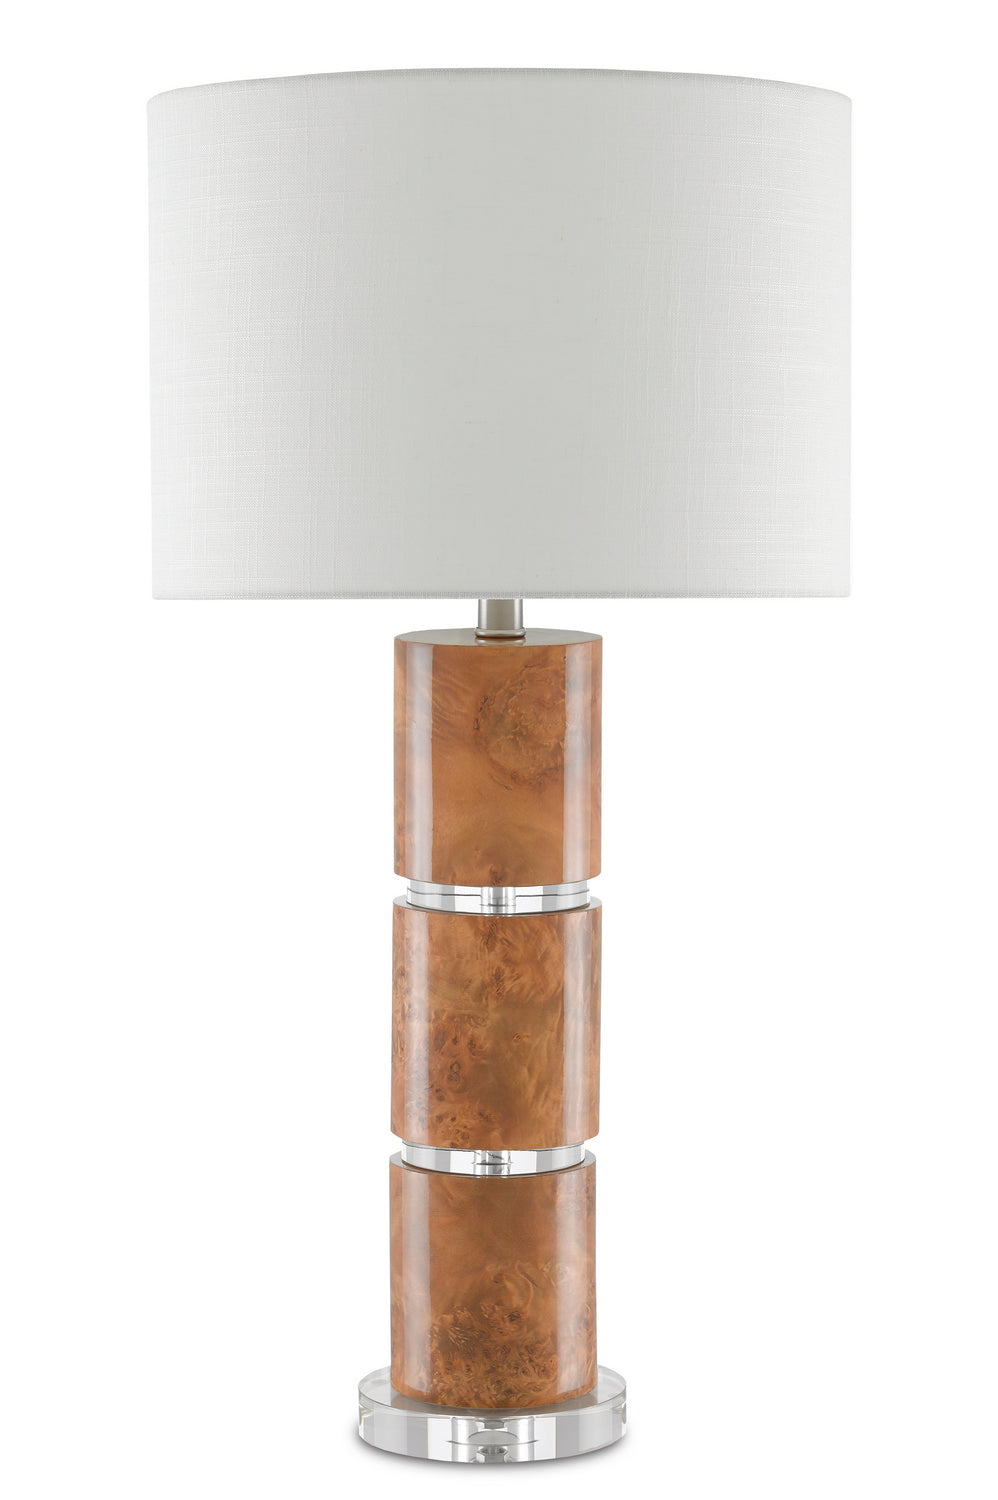 One Light Table Lamp from the Birdseye collection in Birdseye Maple Veneer finish